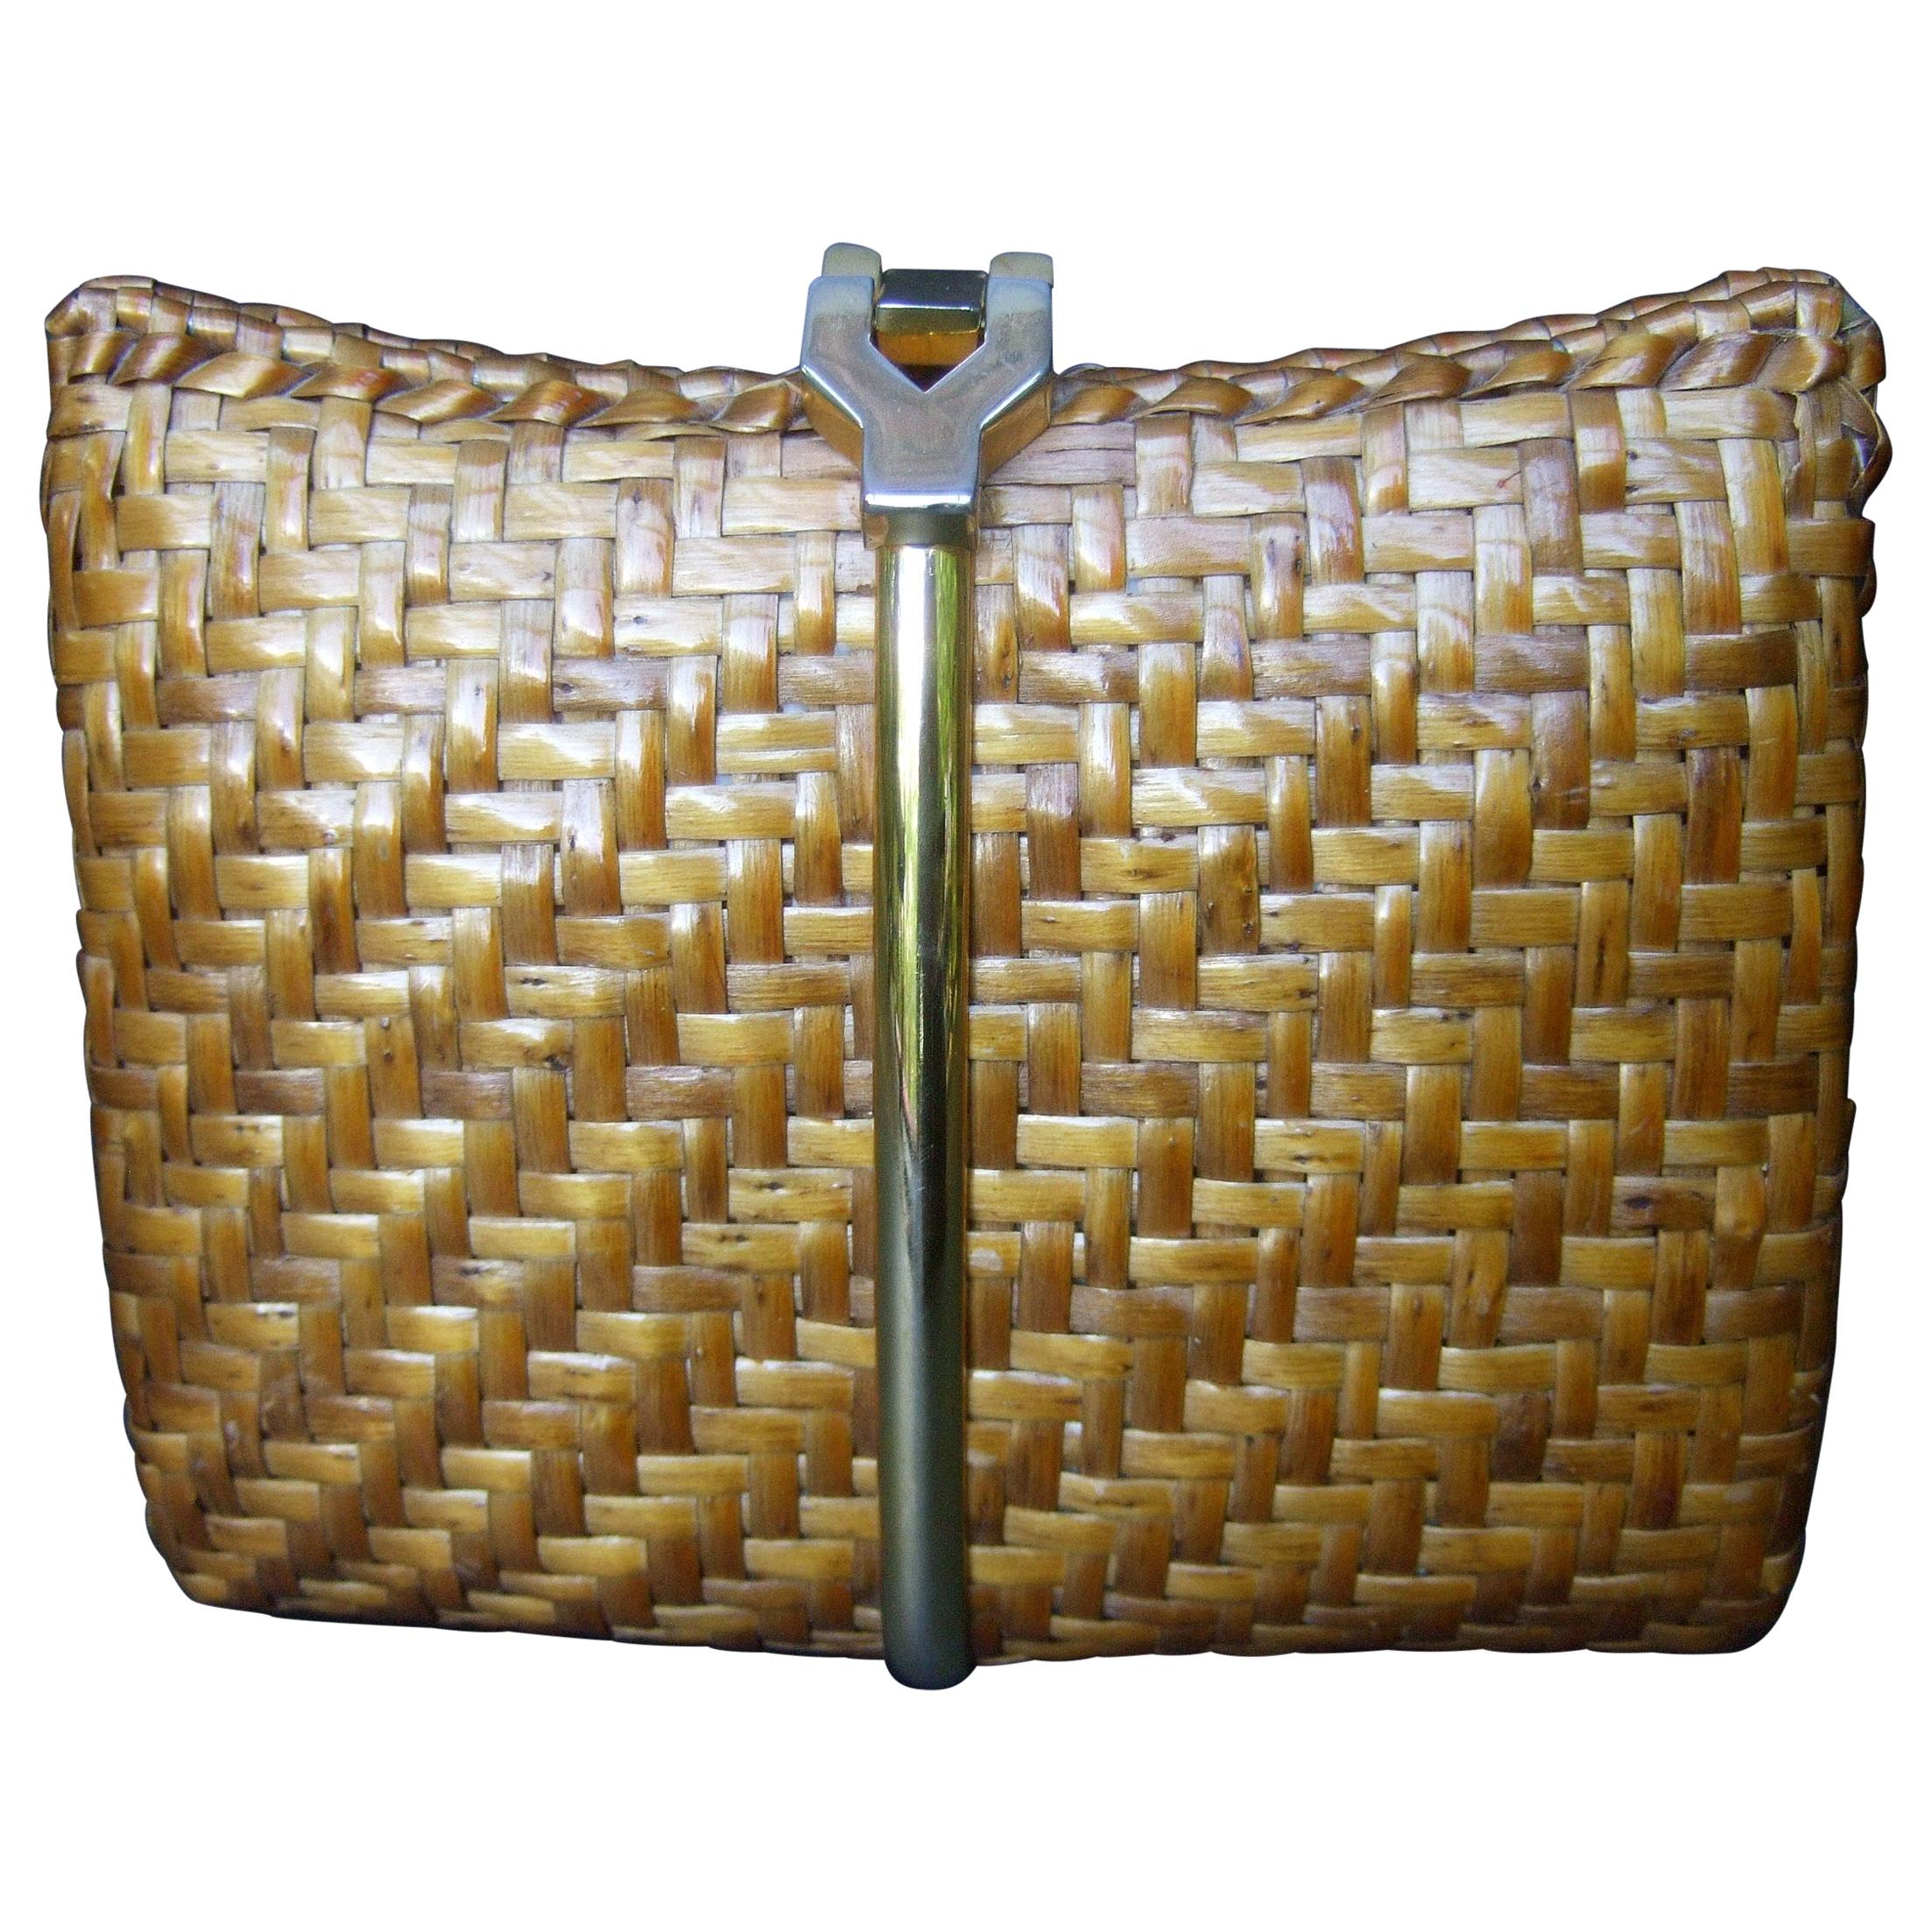 Rodo Italy Chic Woven Wicker Rattan Clutch Bag c 1980 For Sale